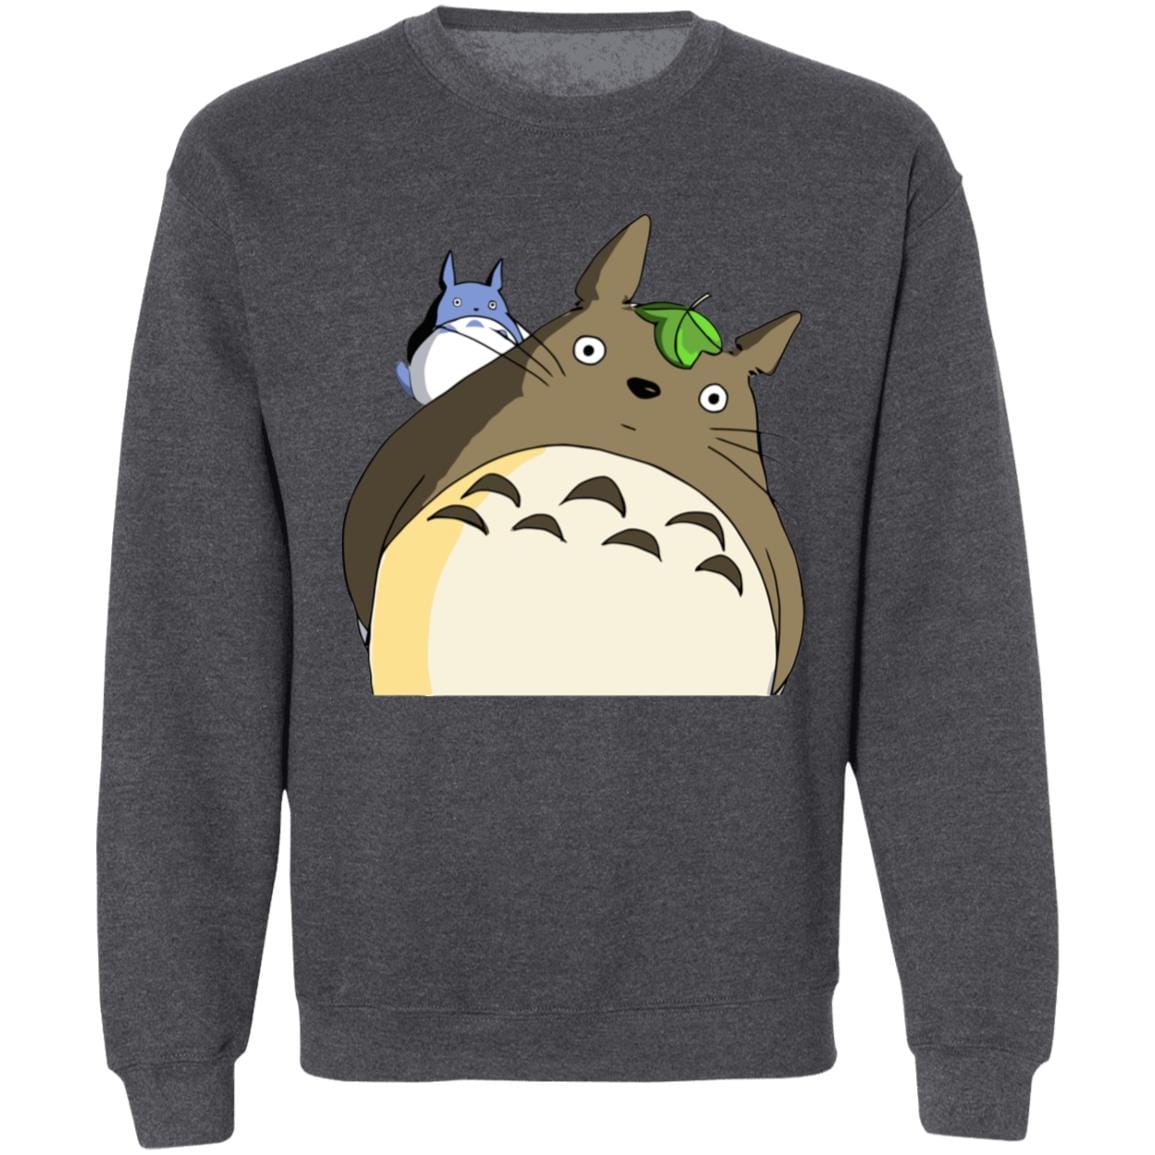 The Curious Totoro Sweatshirt